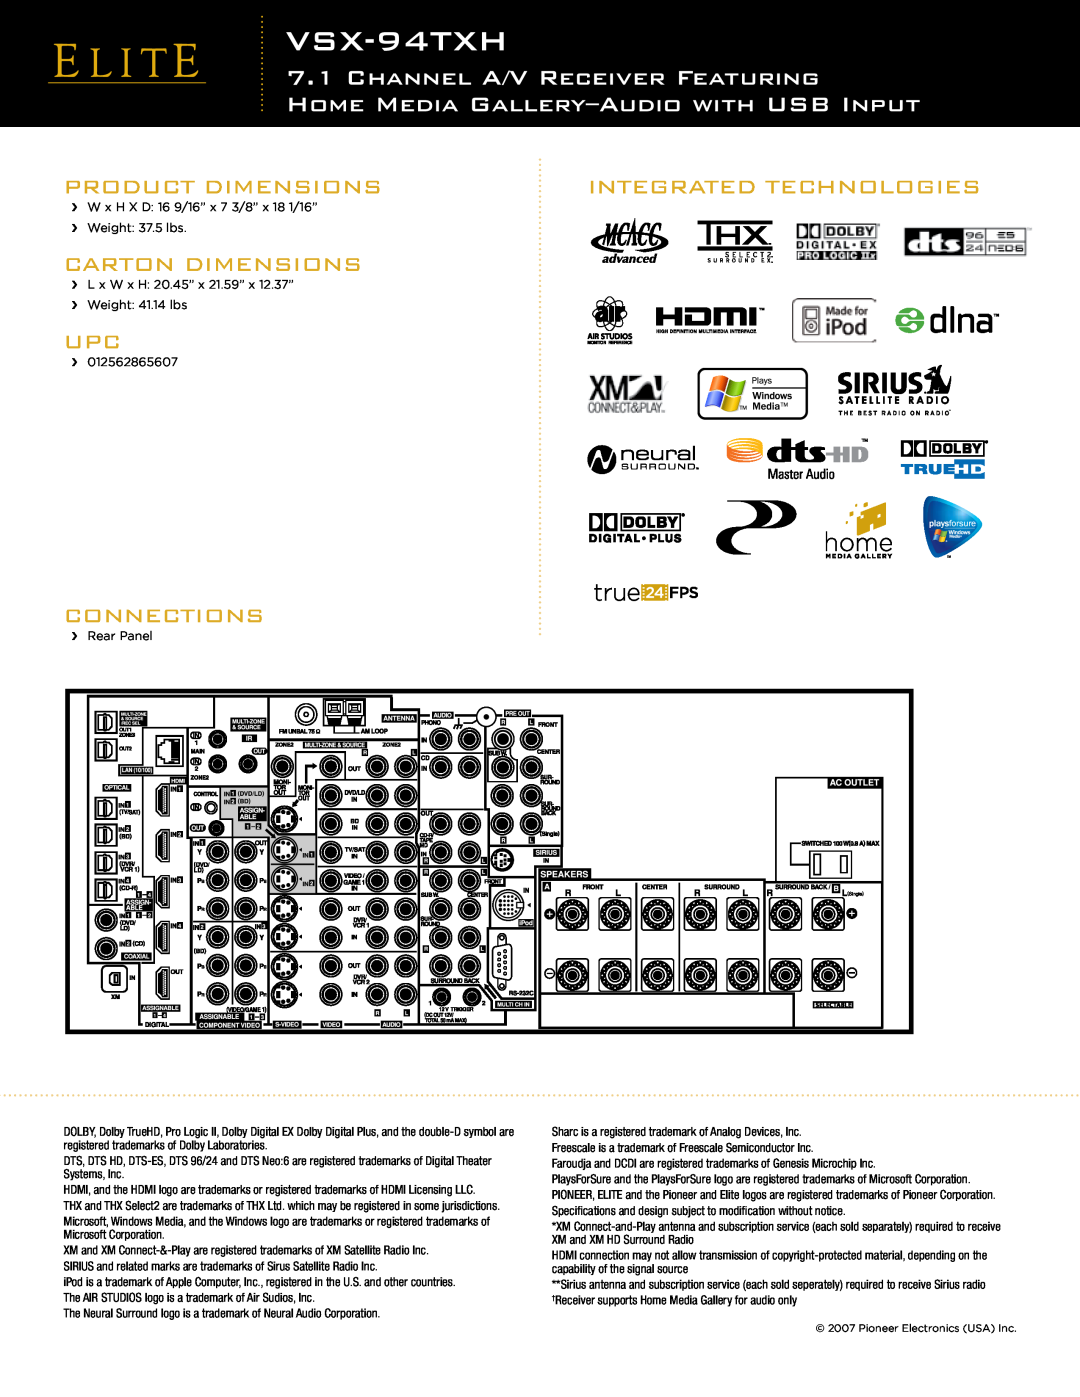 Elite VSX-94TXH manual Product Dimensions, Integrated Technologies, Carton Dimensions, Connections 